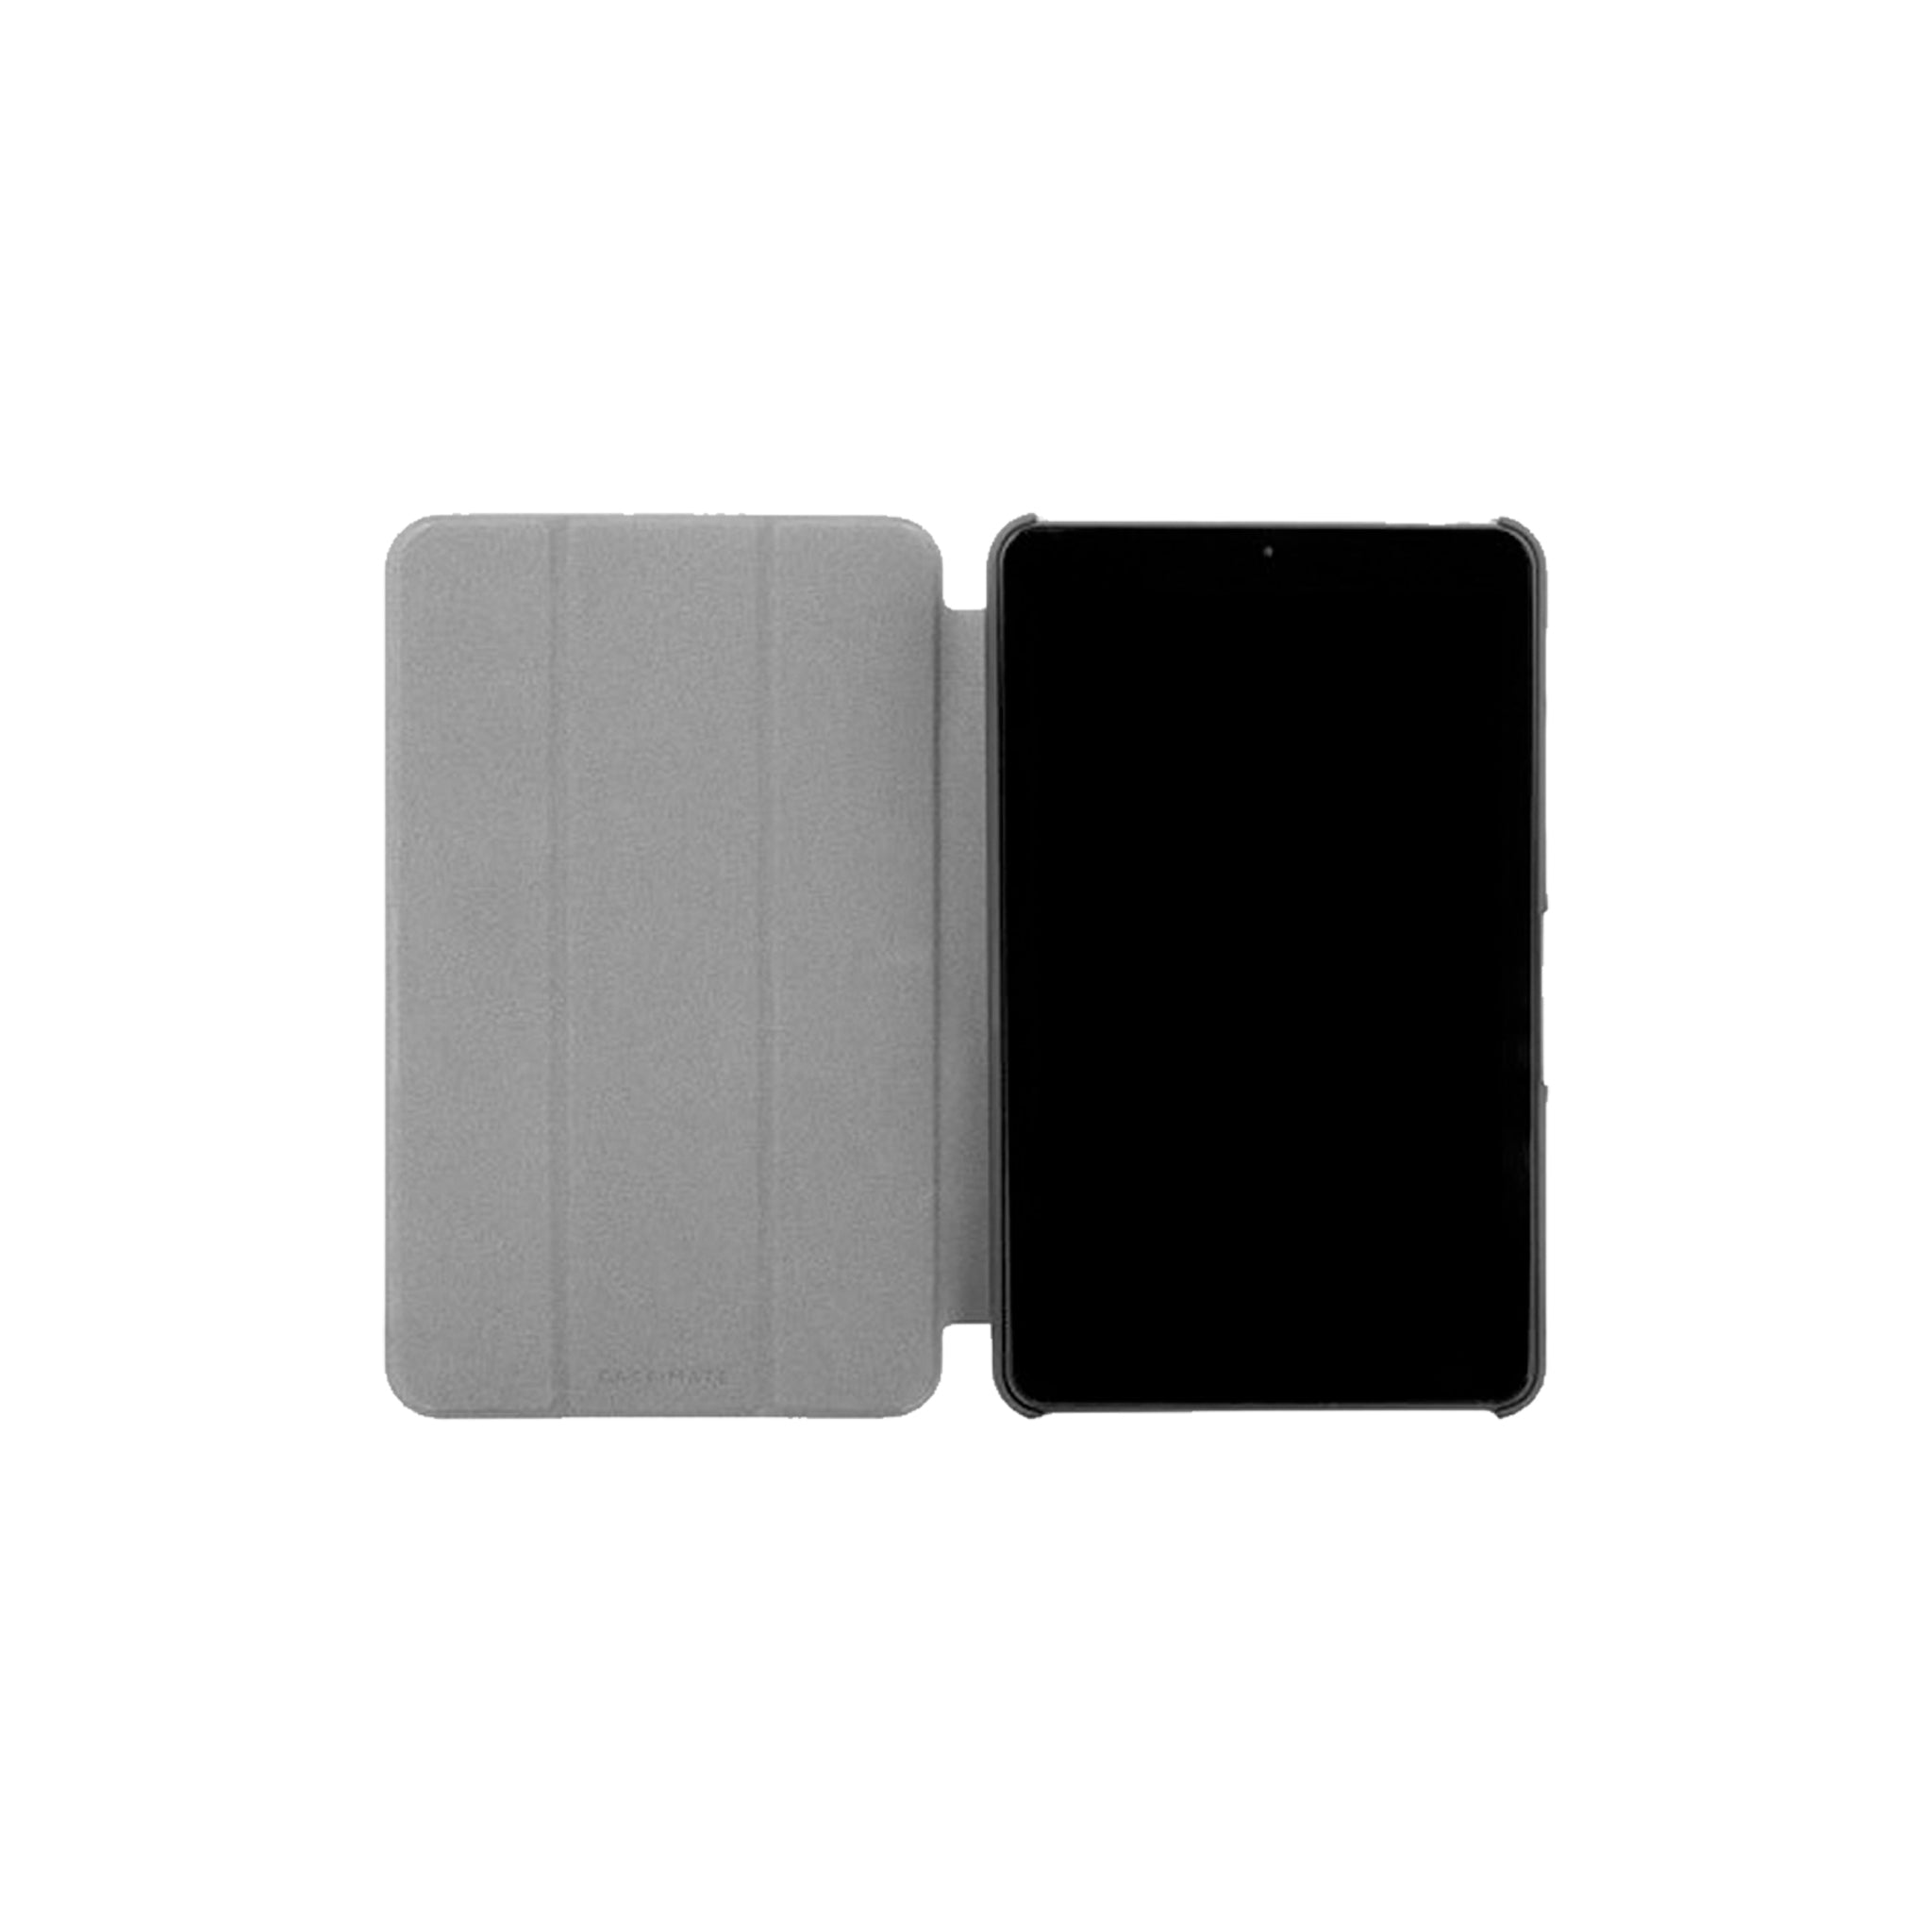 Case-mate - Tuxedo Folio For Samsung Galaxy Tab A 8.0 2018 - Black